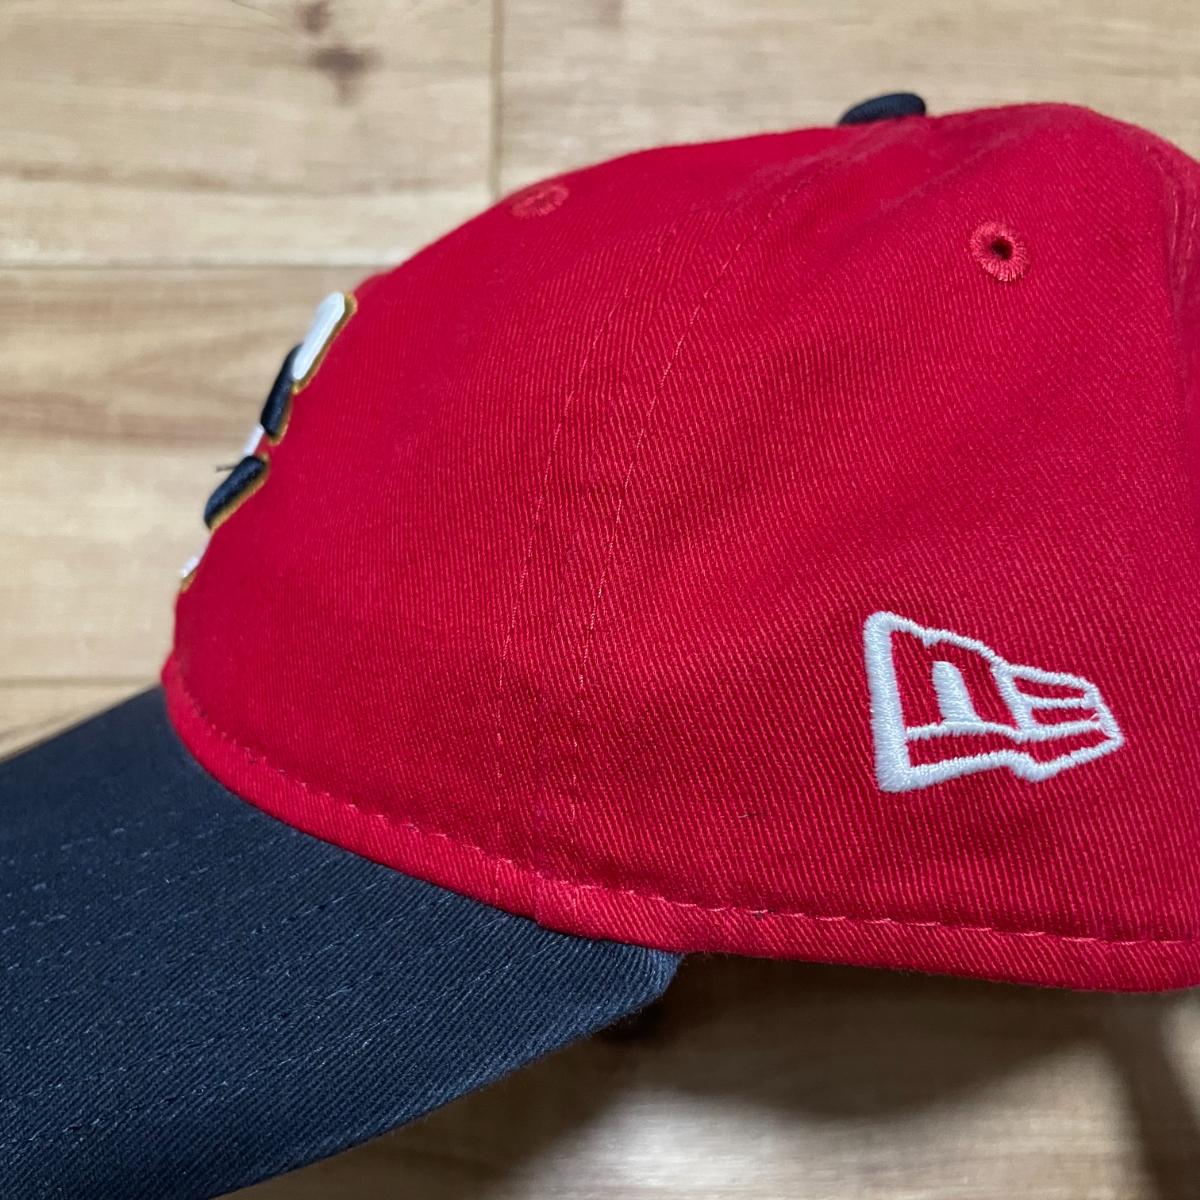 NEWERA 【9Twenty】 ニューエラ キャップ 帽子 MLB ミネソタ ツインズ TWEINS ストラップバックキャップ サイズ調節可 2トーン 赤 紺 ALT2_画像3